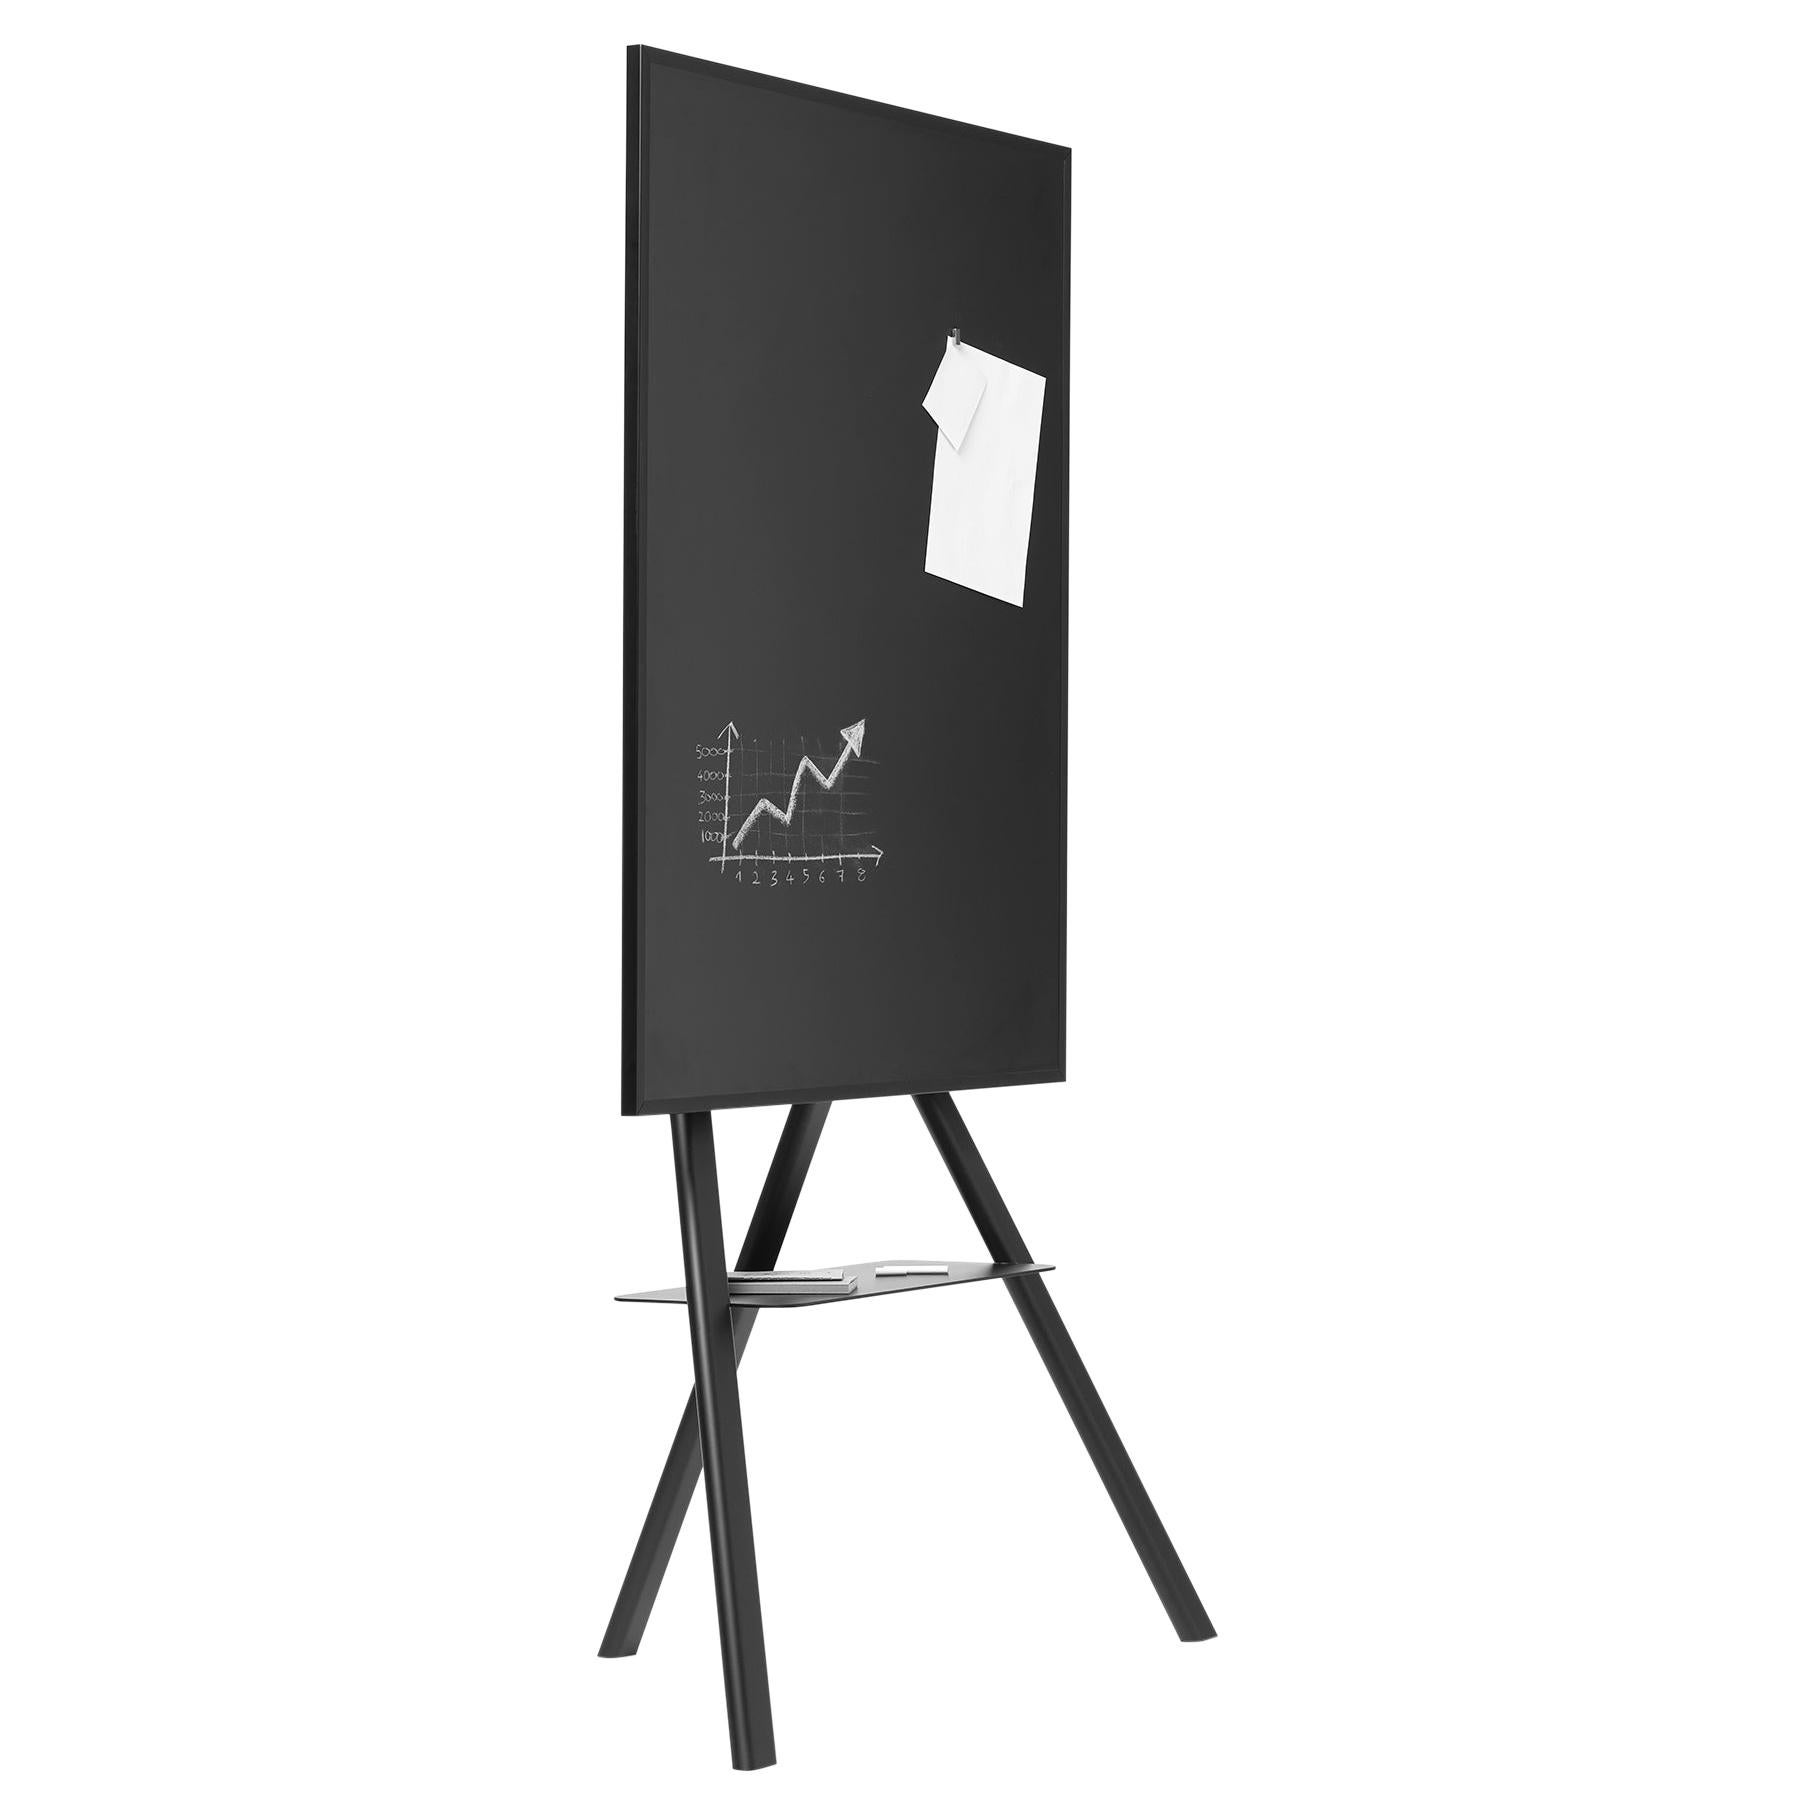 Cartesio Black Writing Board with Matt Black Frame by Lapo Ciatti For Sale